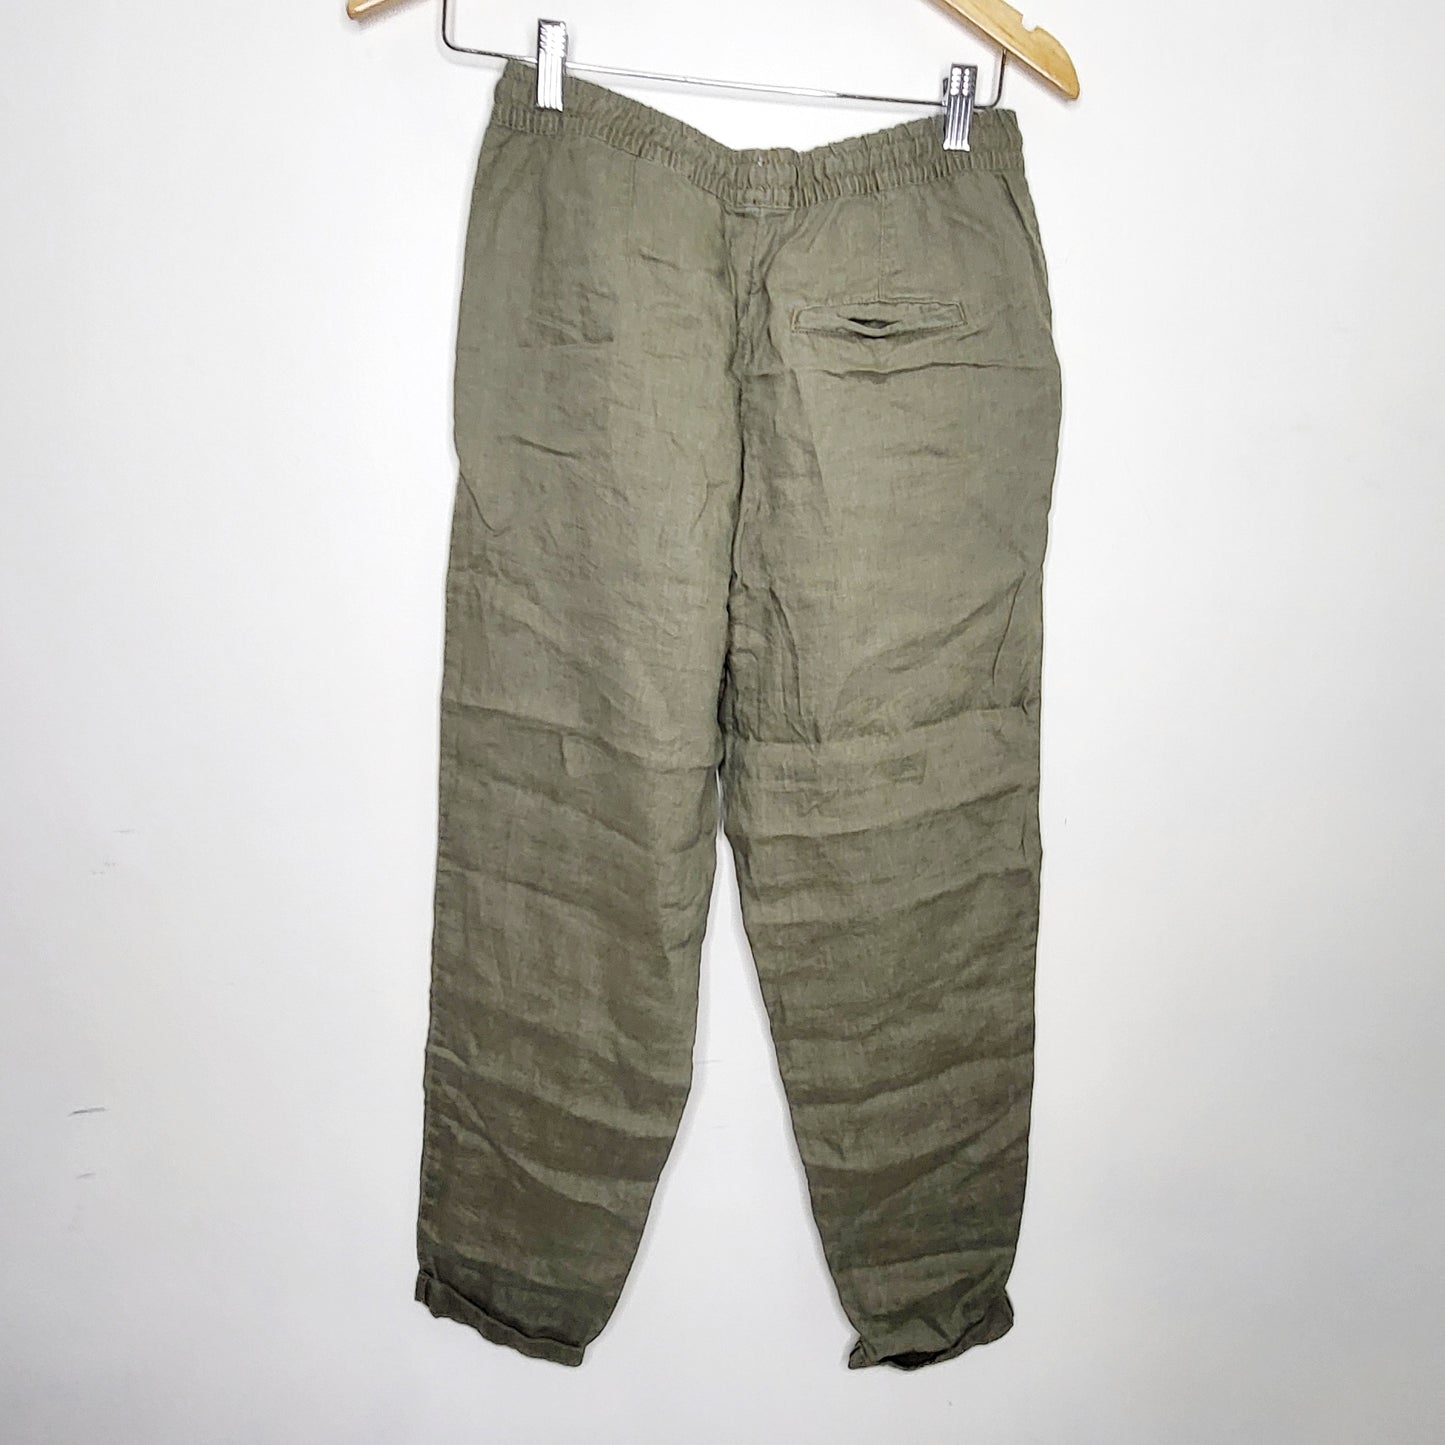 DZAV1 - H and M L.O.G.G. green linen drawstring pants, size 4, good condition